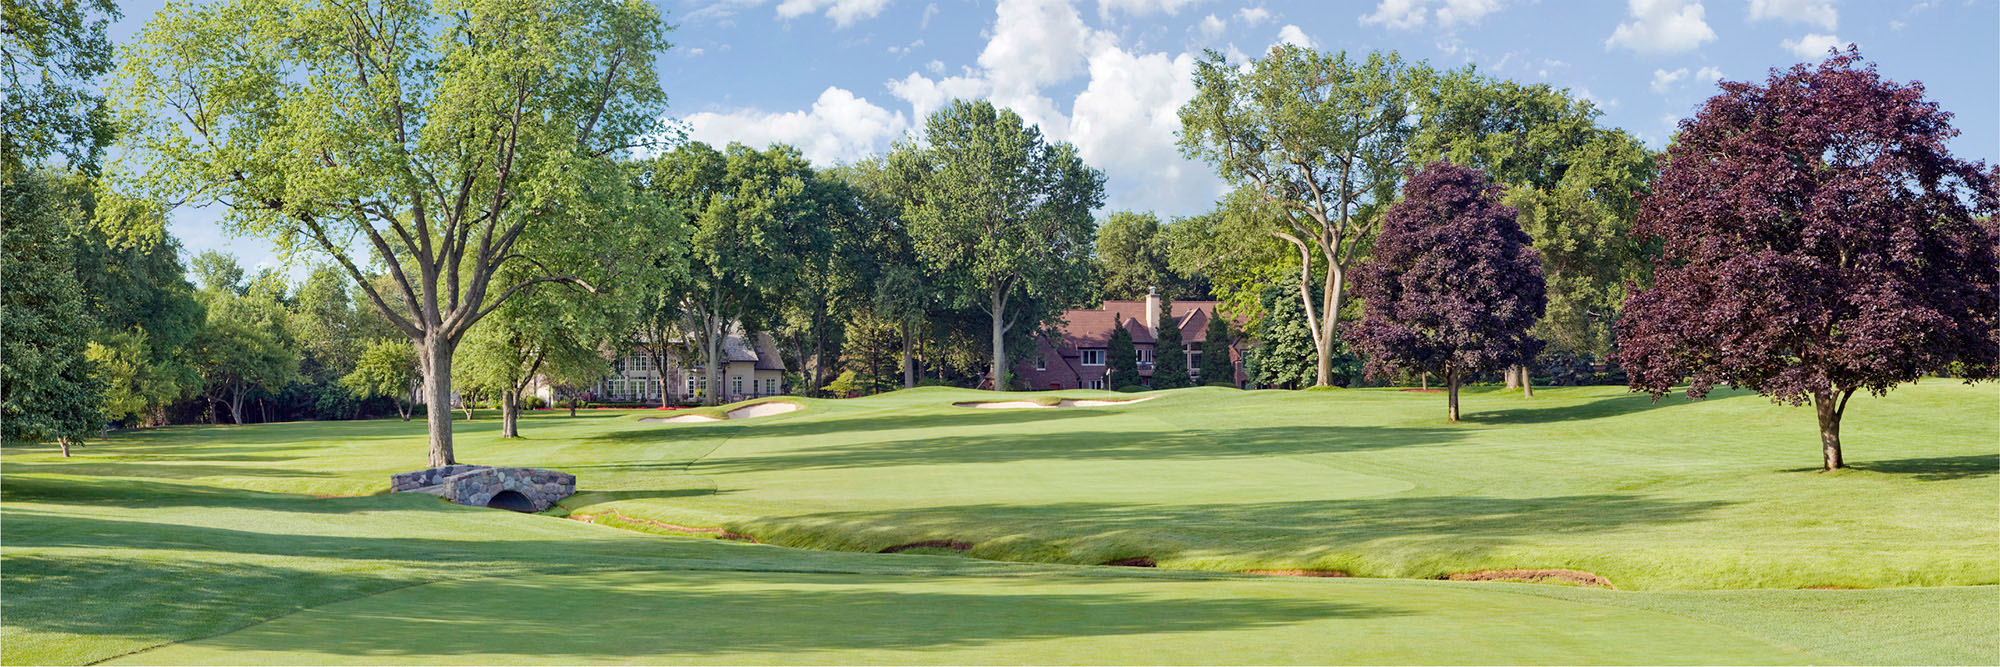 Golf Course Image - Oakland Hills No. 5